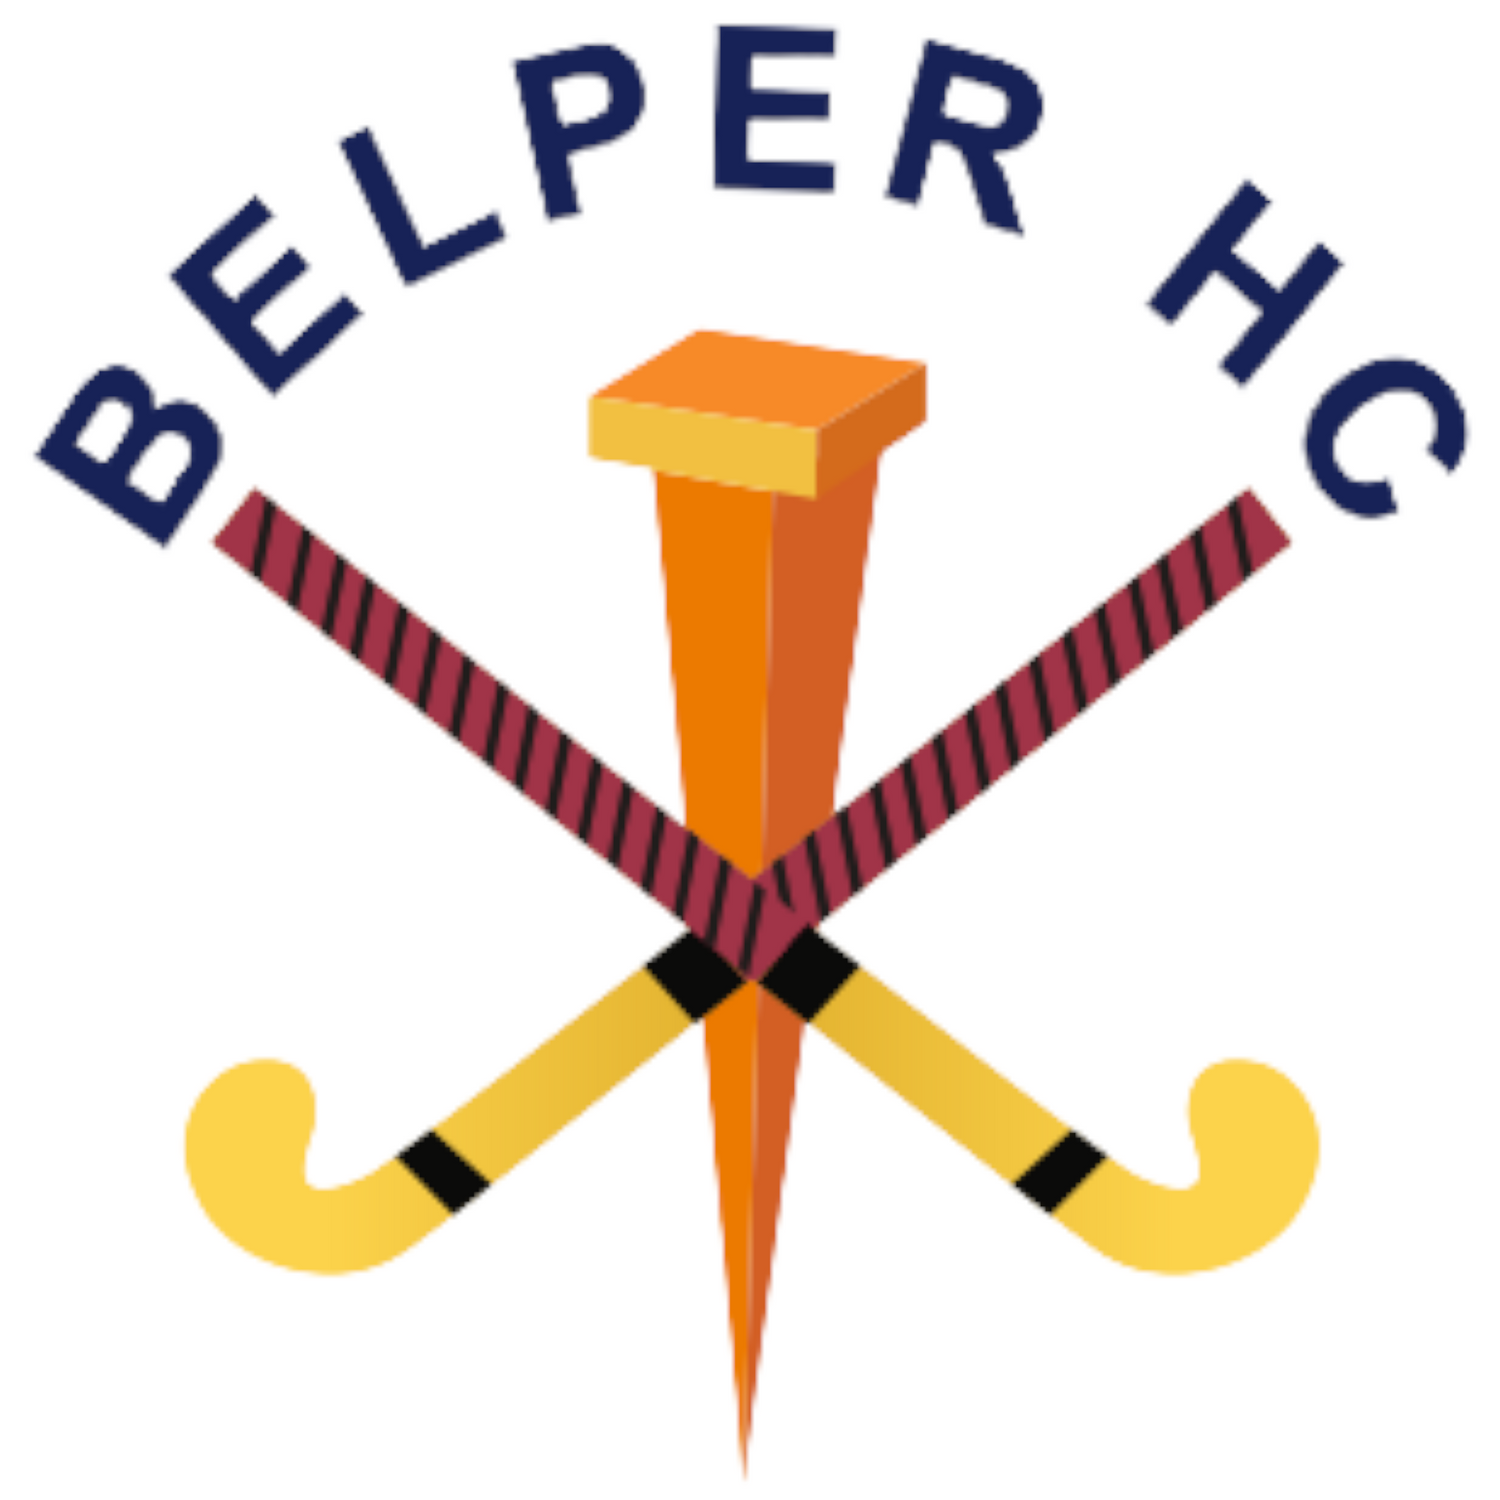 Belper HC